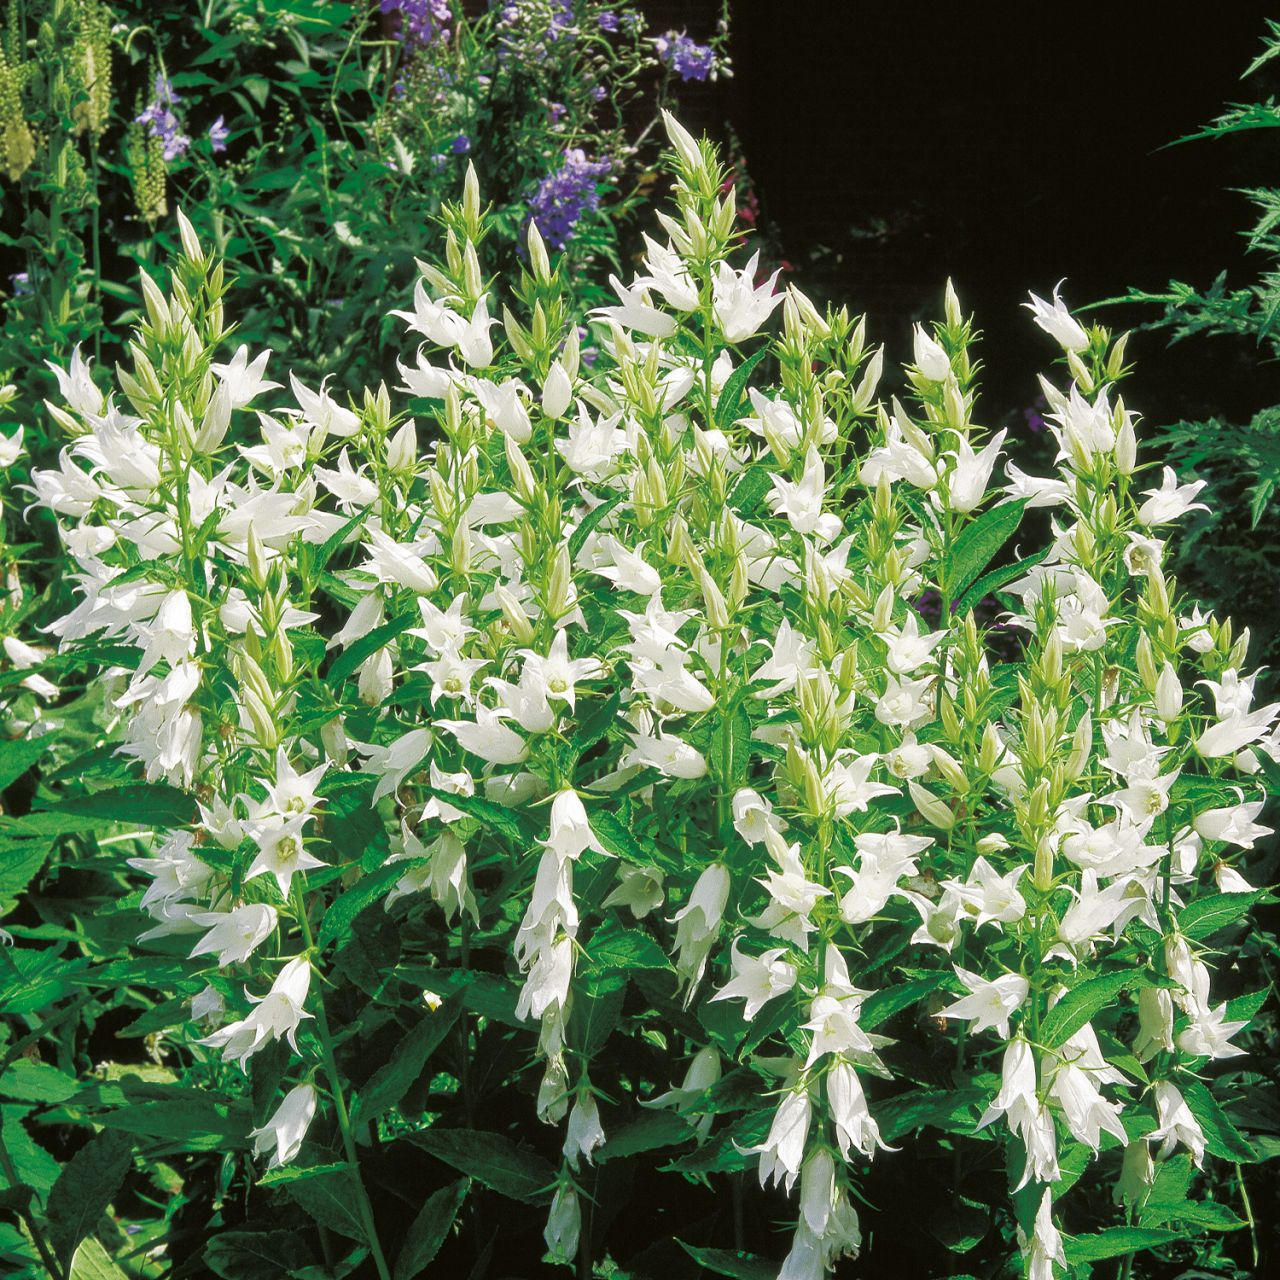  Wald-Glockenblume weiß - Campanula latifolia var. macrantha